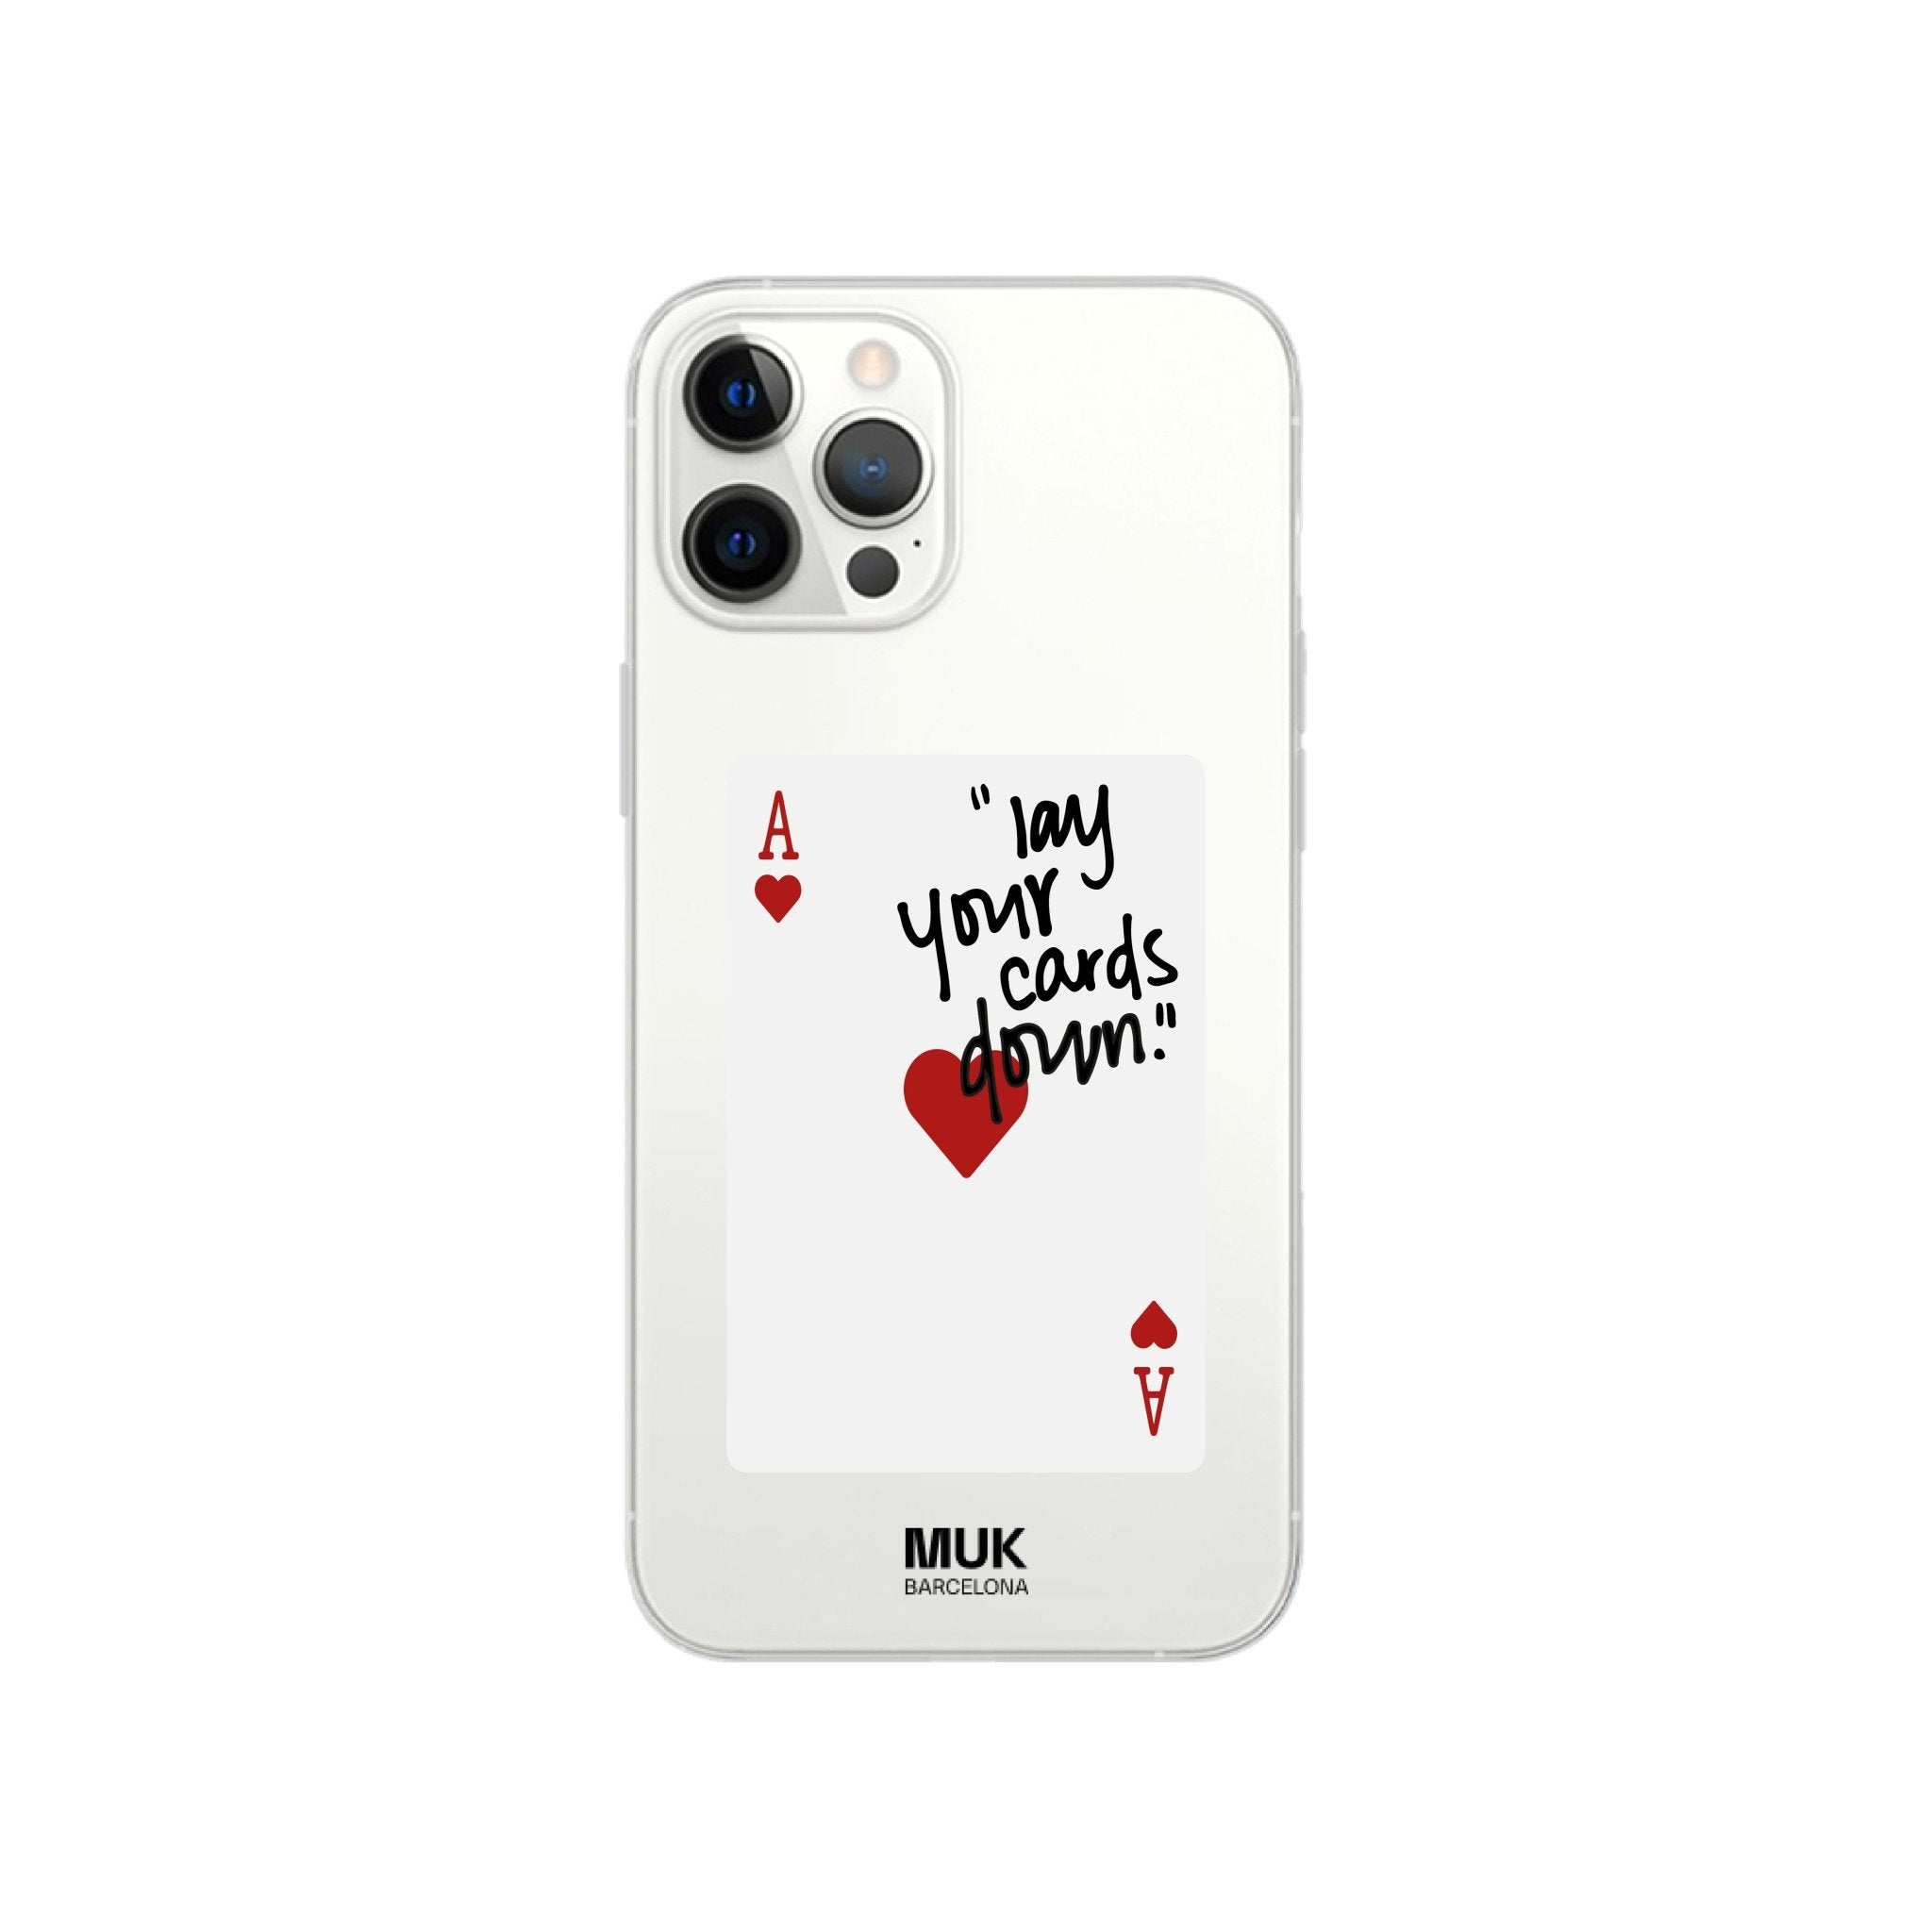 Phone Case transparente de sticker de carta de póker.
